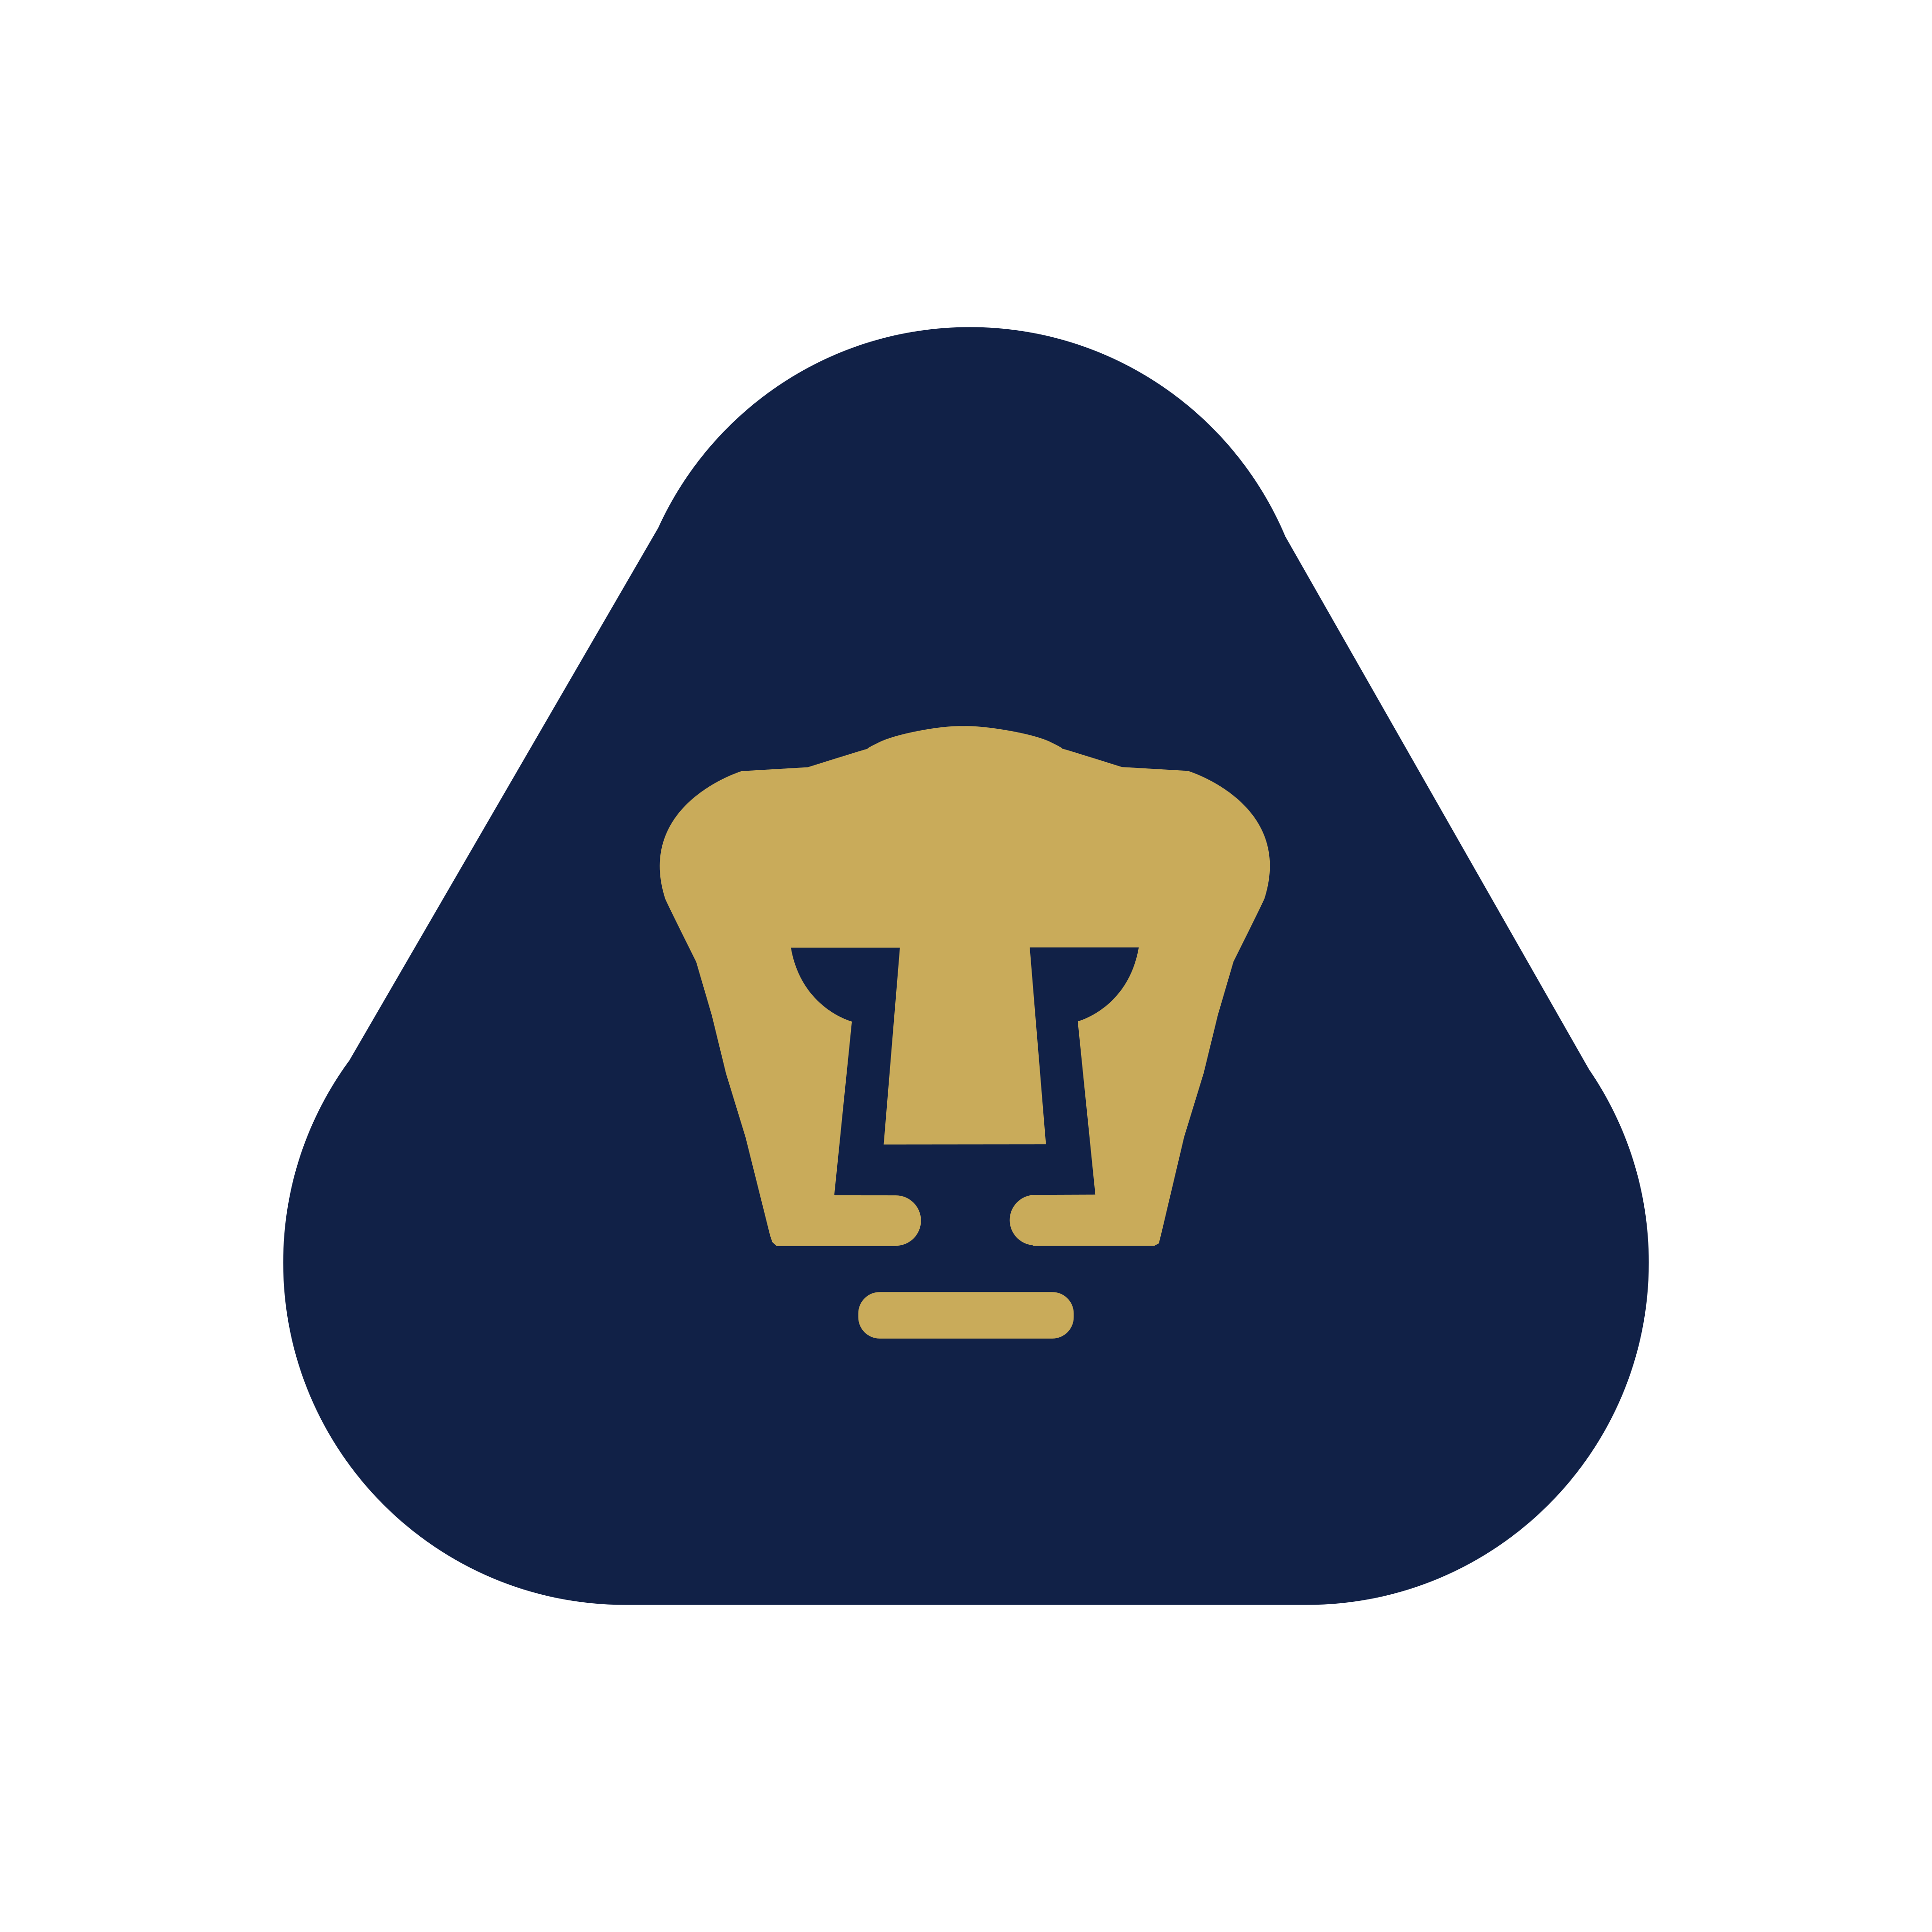 pumas unam logo 0 1 - Pumas UNAM Logo - Escudo